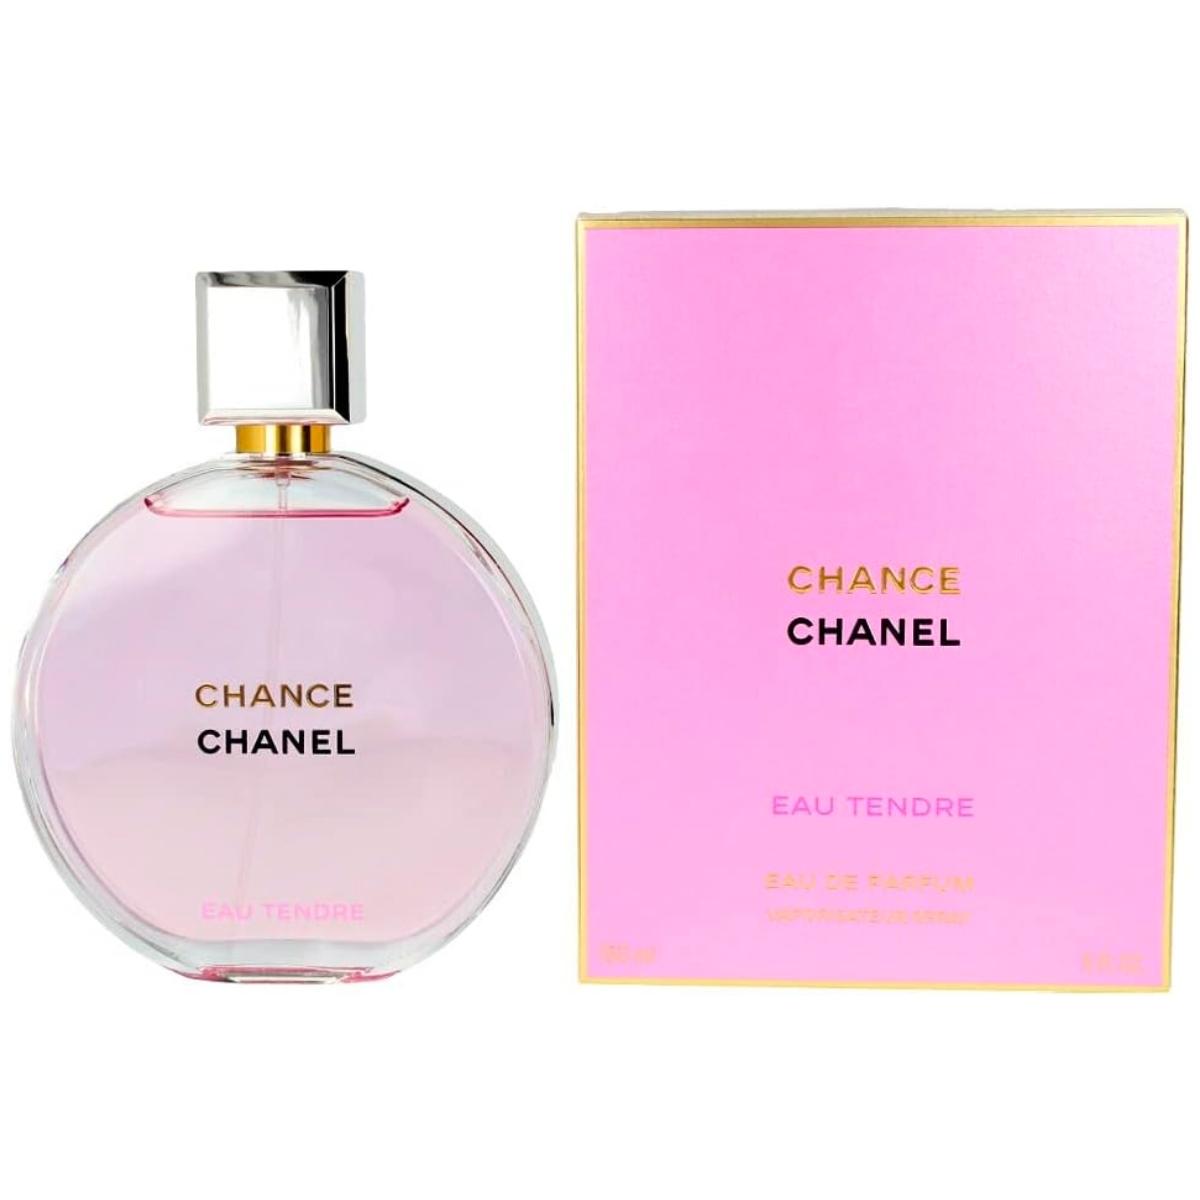 Chanel perfume - chance tendre by chanel - perfumes for women - eau de toilette,